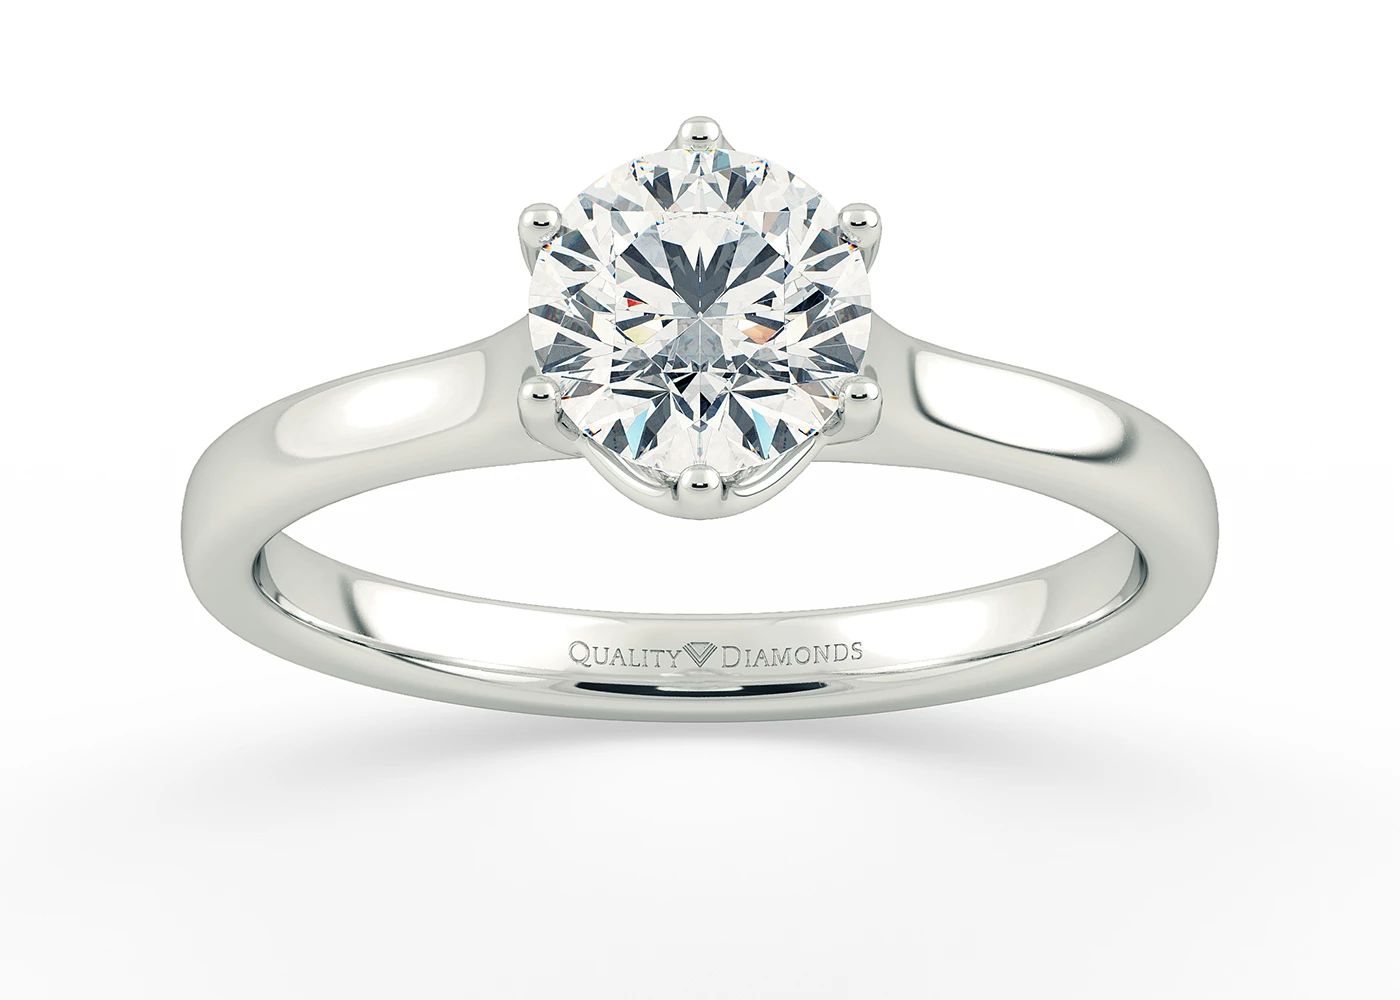 Six Claw Round Brilliant Promessa Diamond Ring in Platinum